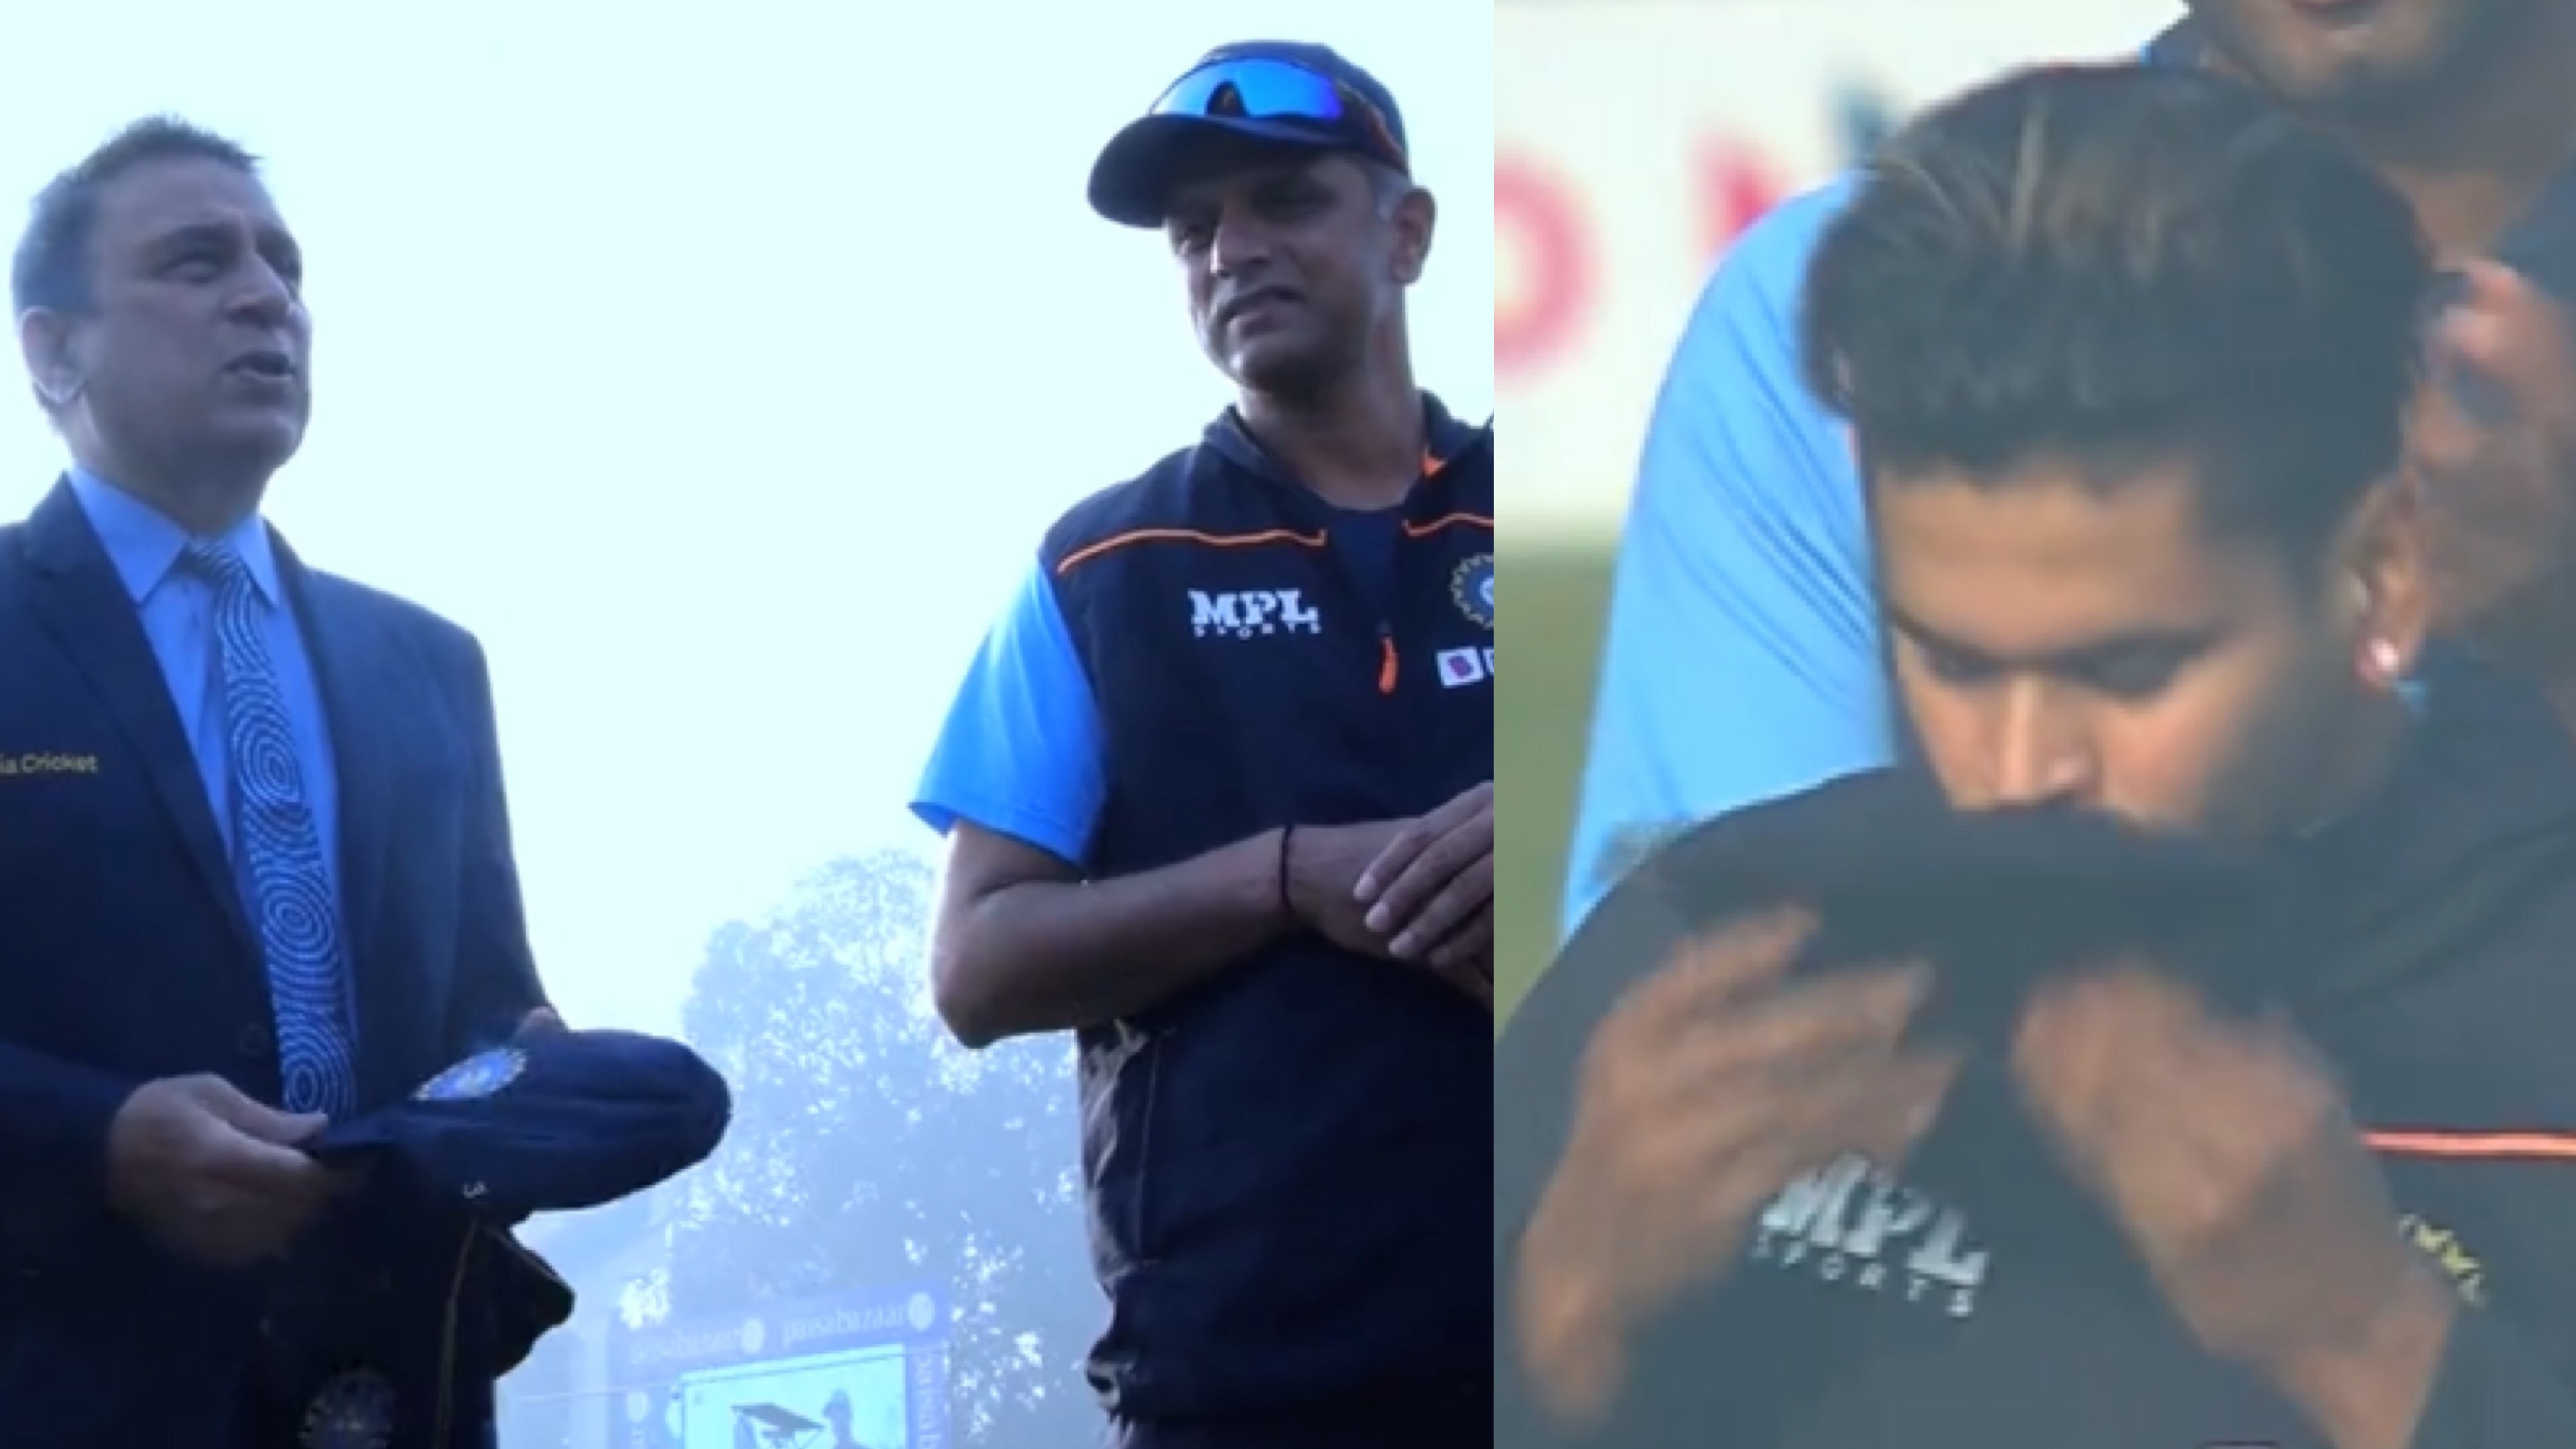 IND v NZ 2021: WATCH - Shreyas Iyer receives his Test cap from Sunil Gavaskar